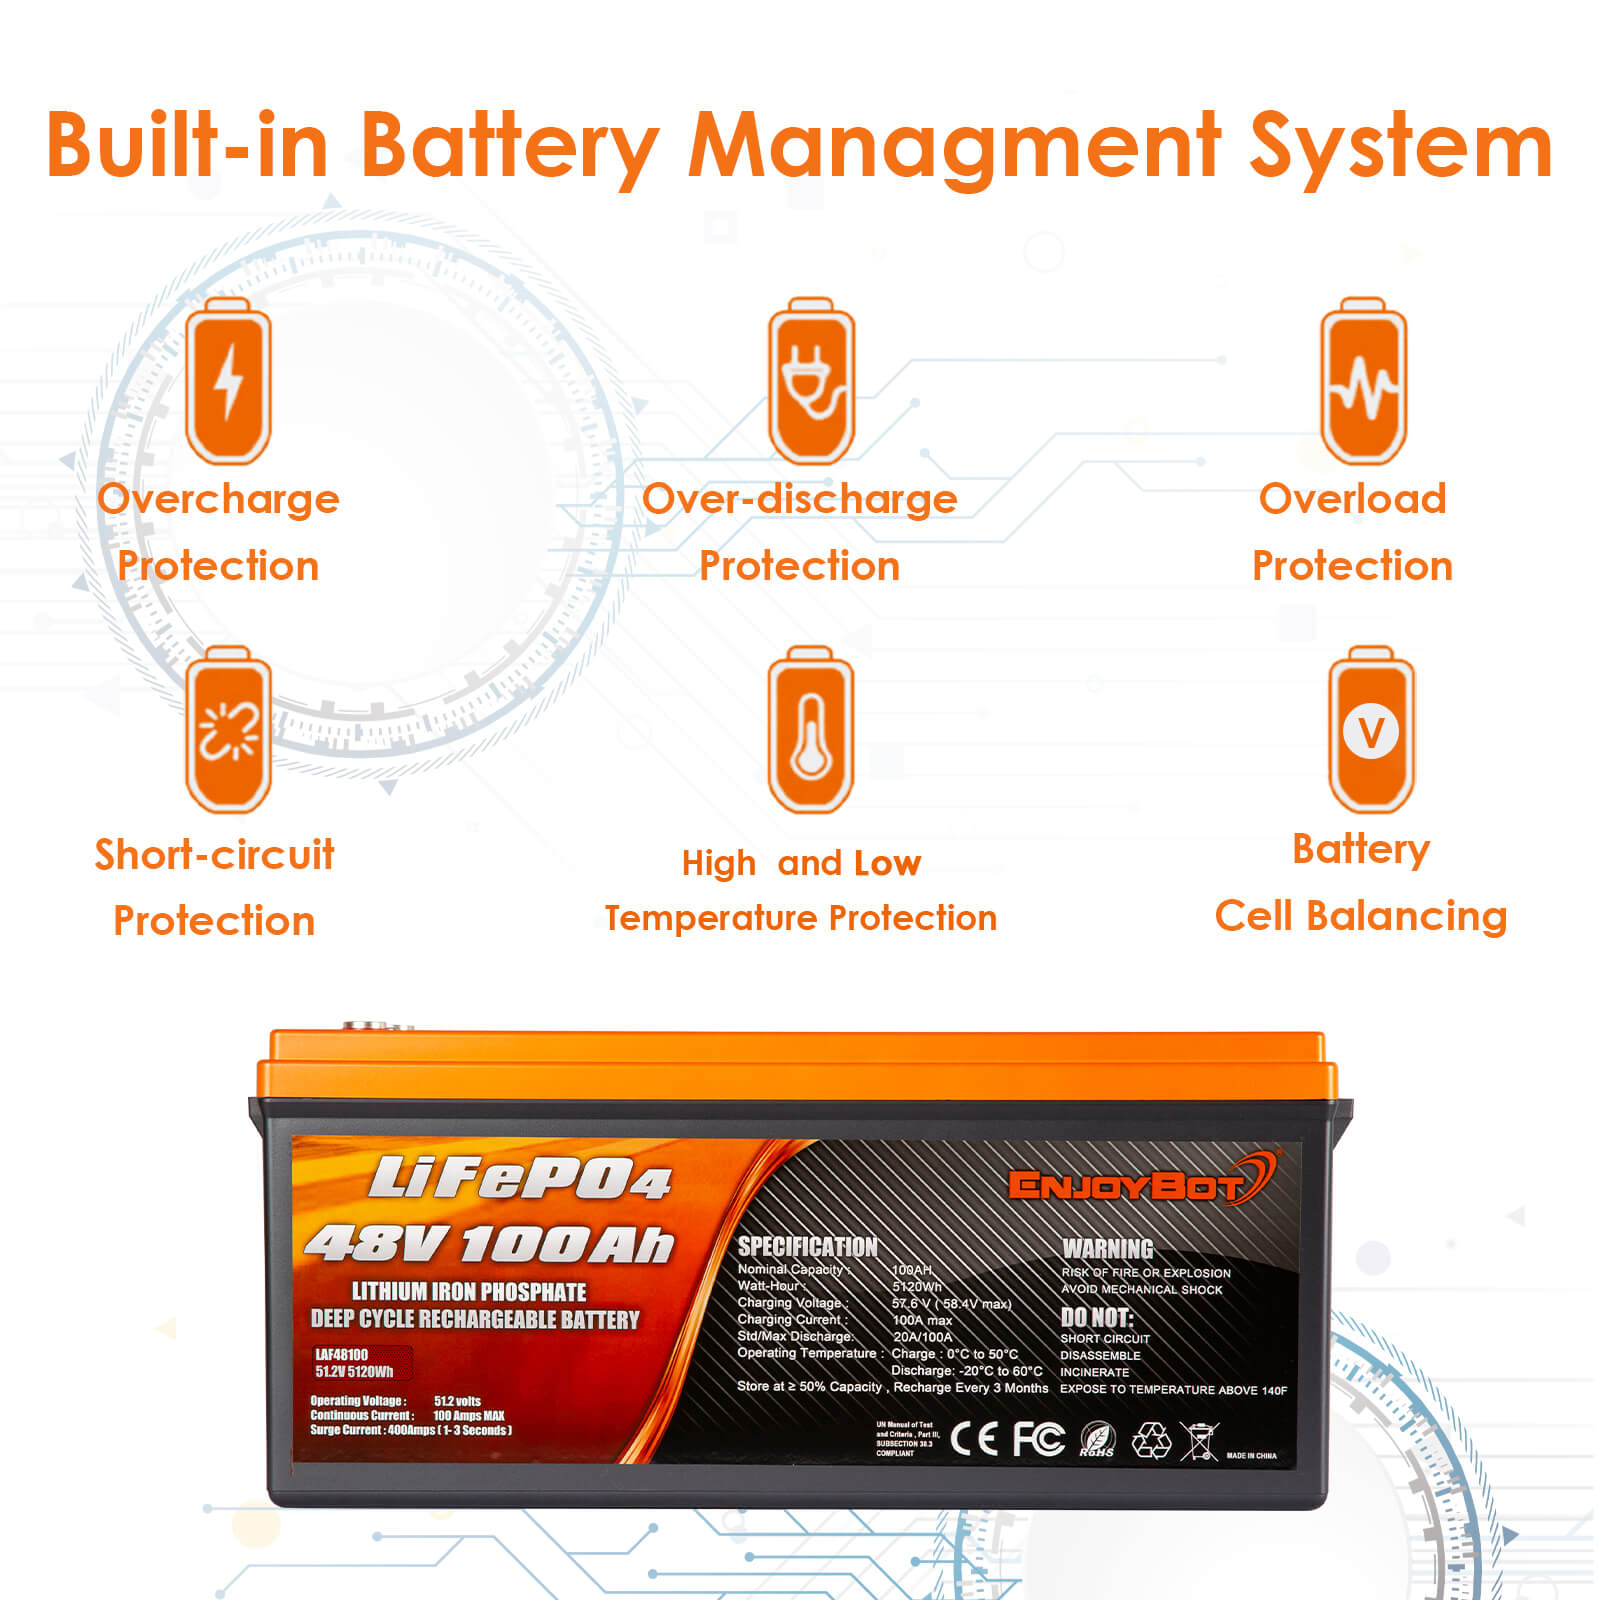 Enjoybot LiFePO4 Golf Cart Battery 48v 100ah Lithium Battery 5120 Wh - 4  batteries - USA / None